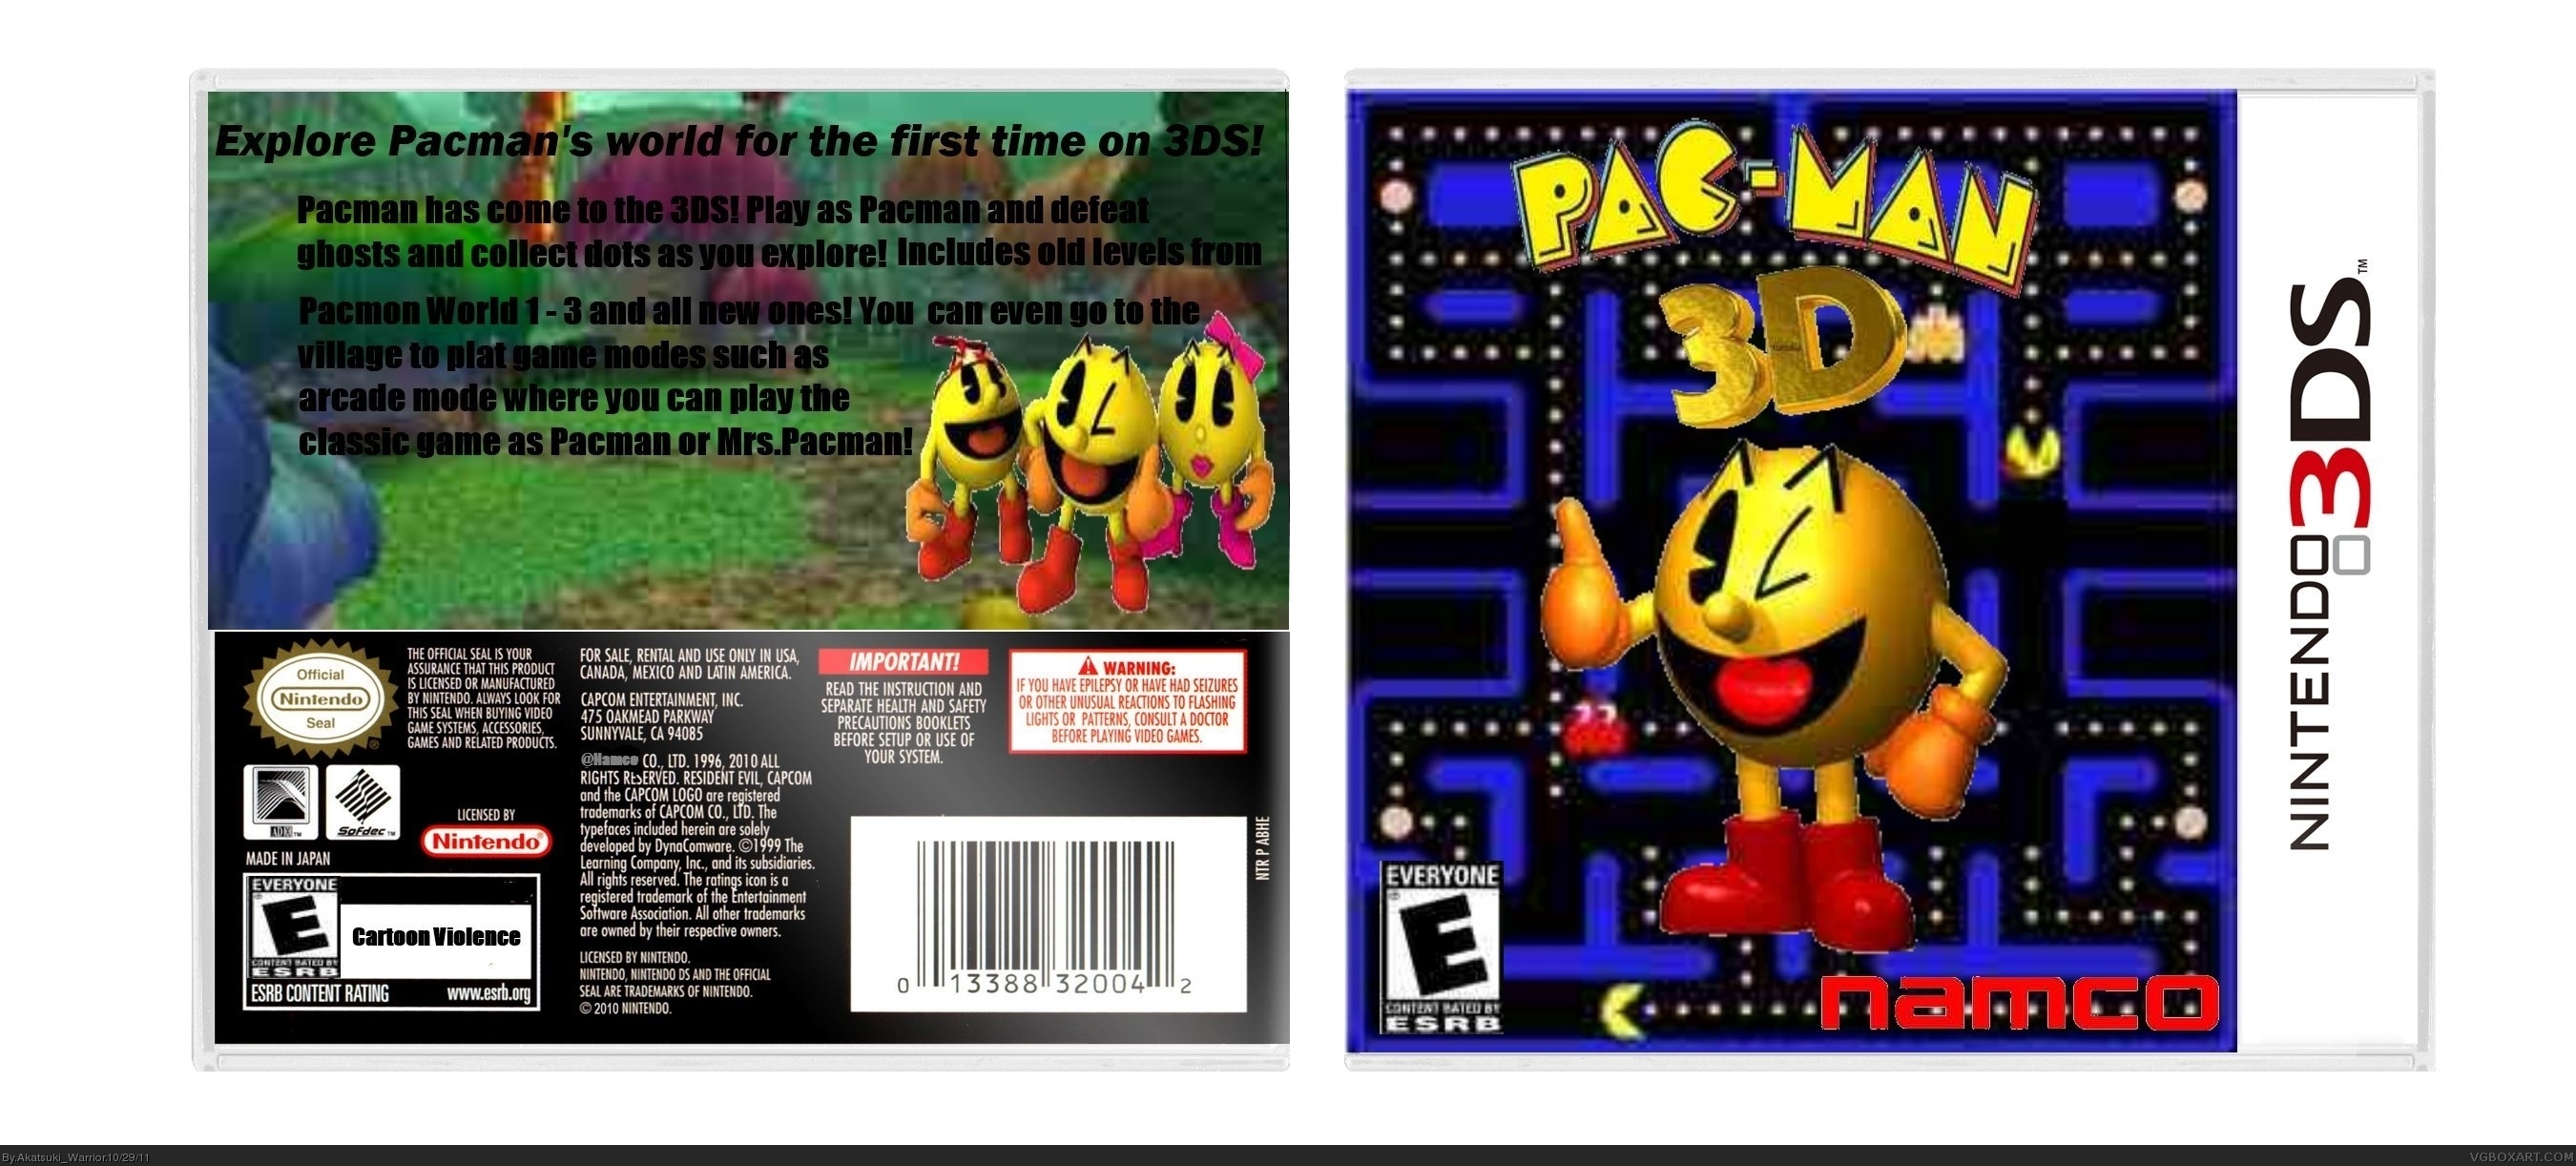 Pac-Man 3D box cover